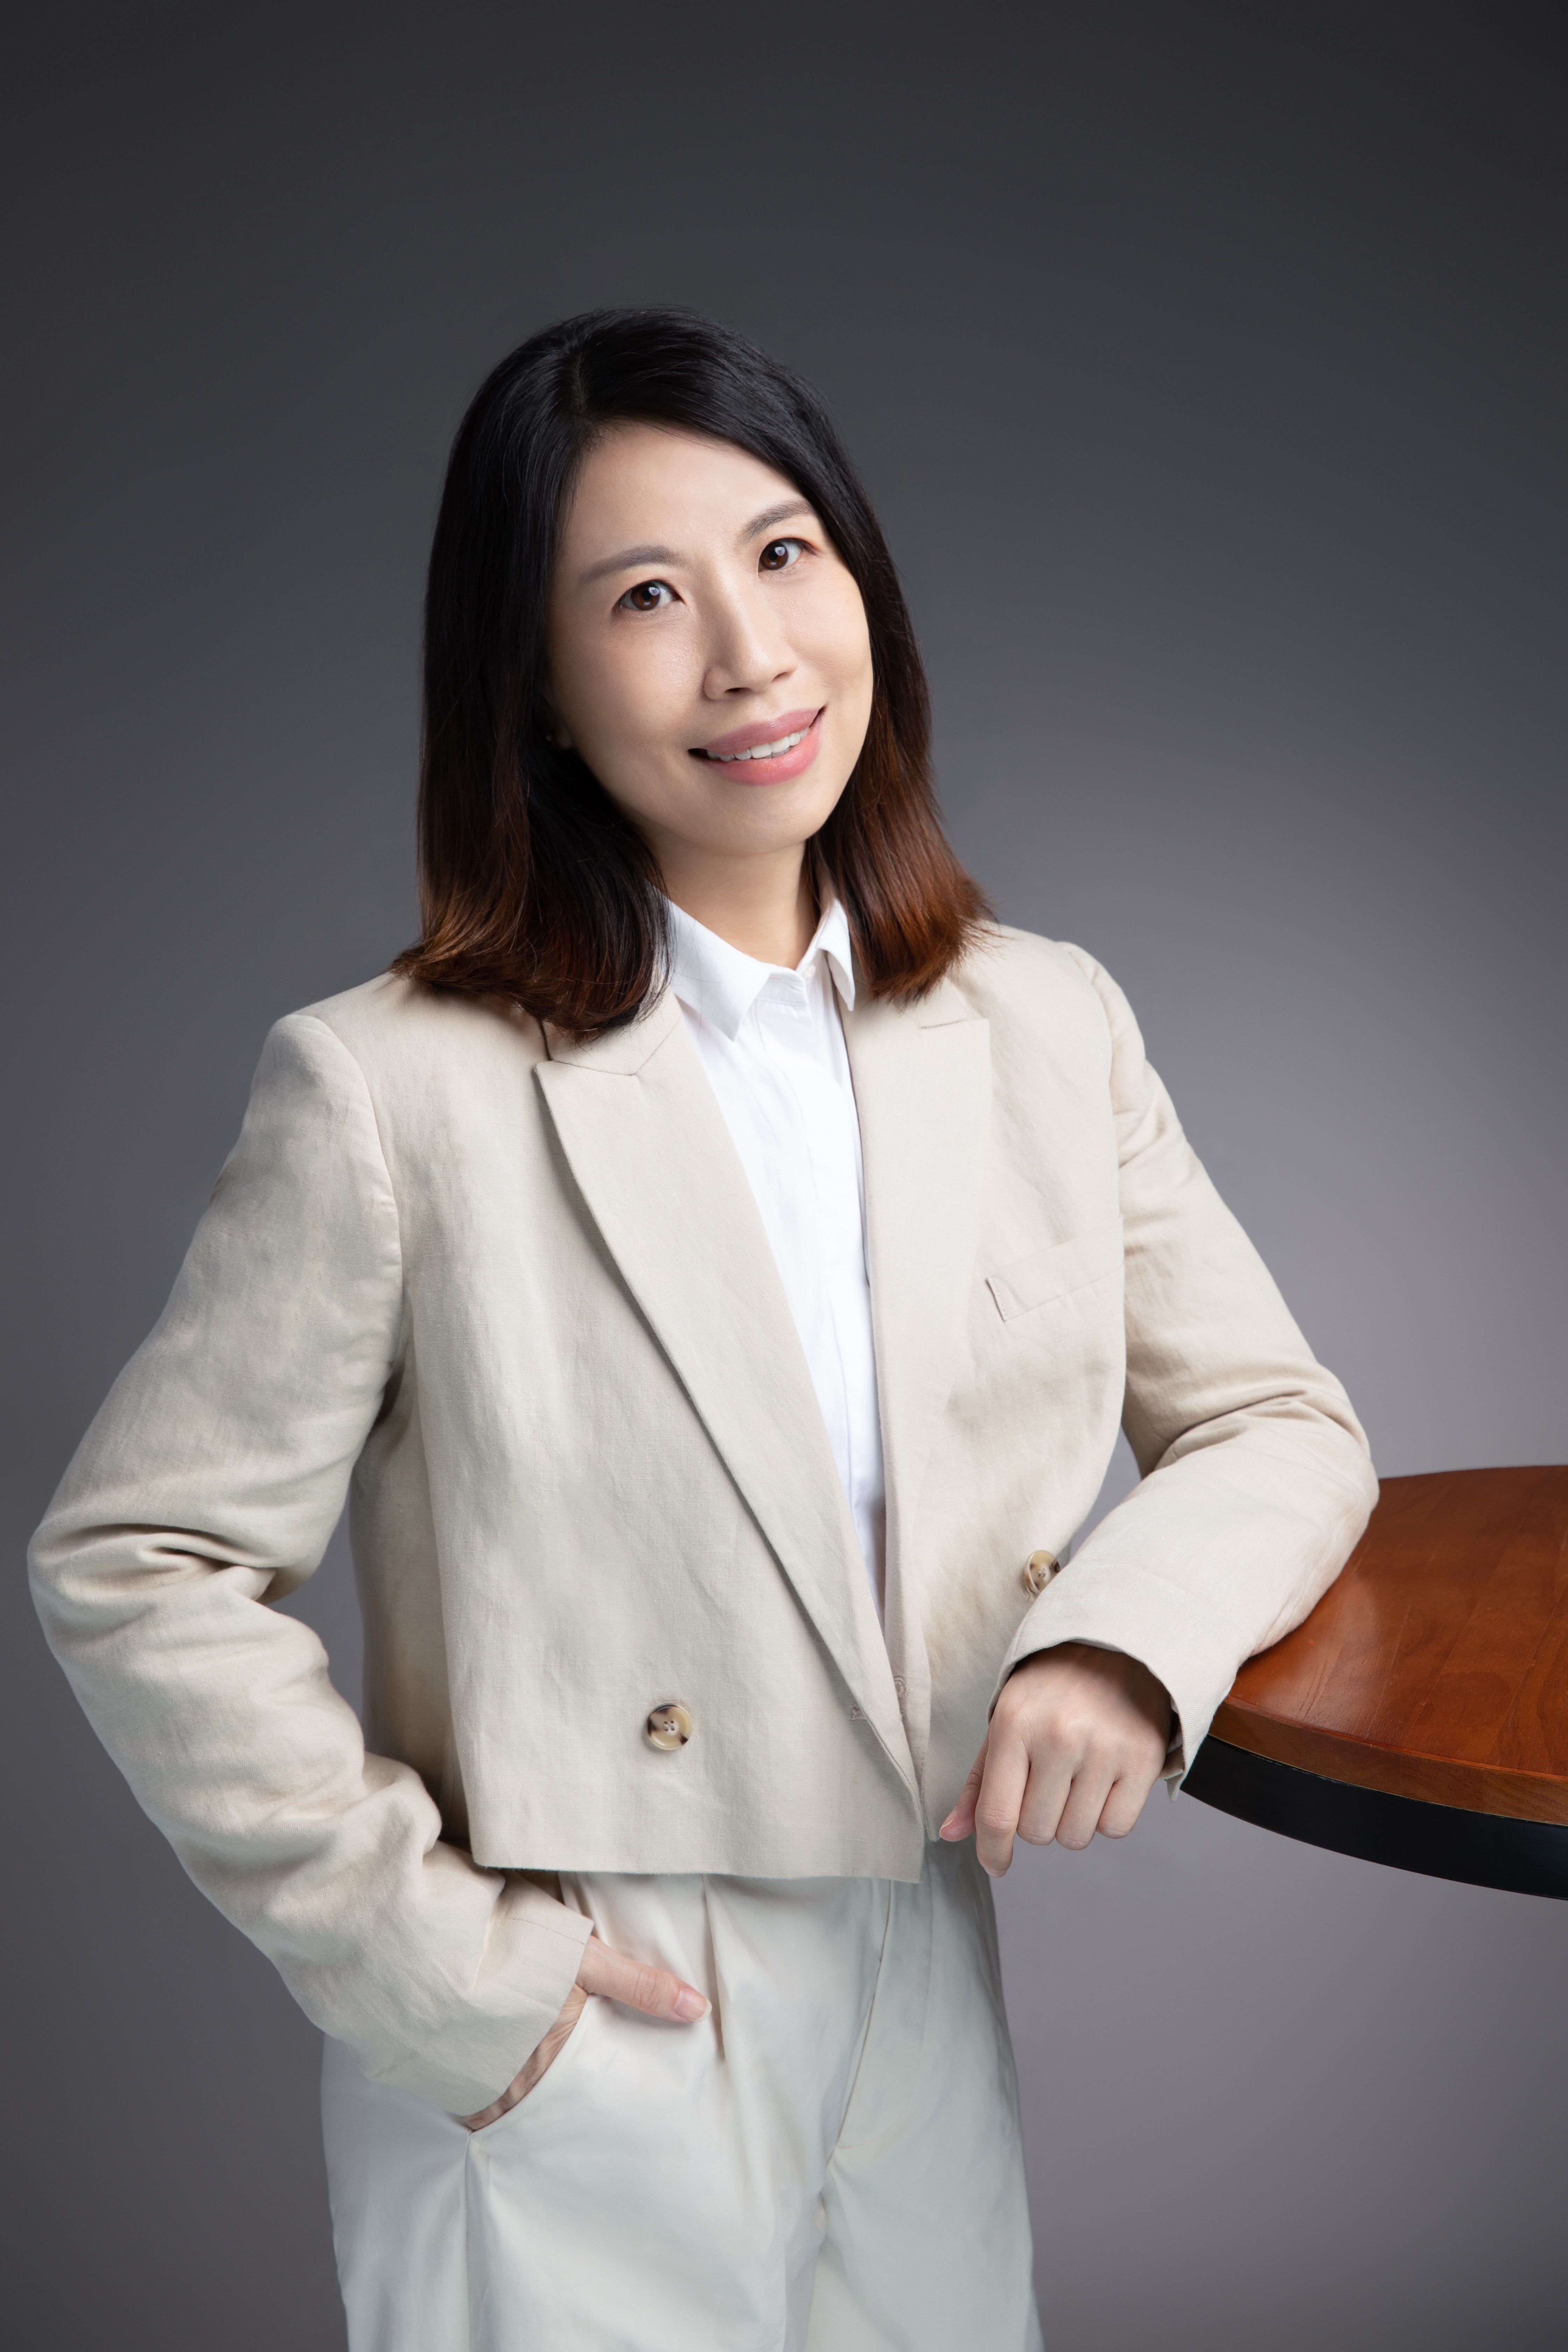 Lenovo HK and Macau General Manager Serena Cheung